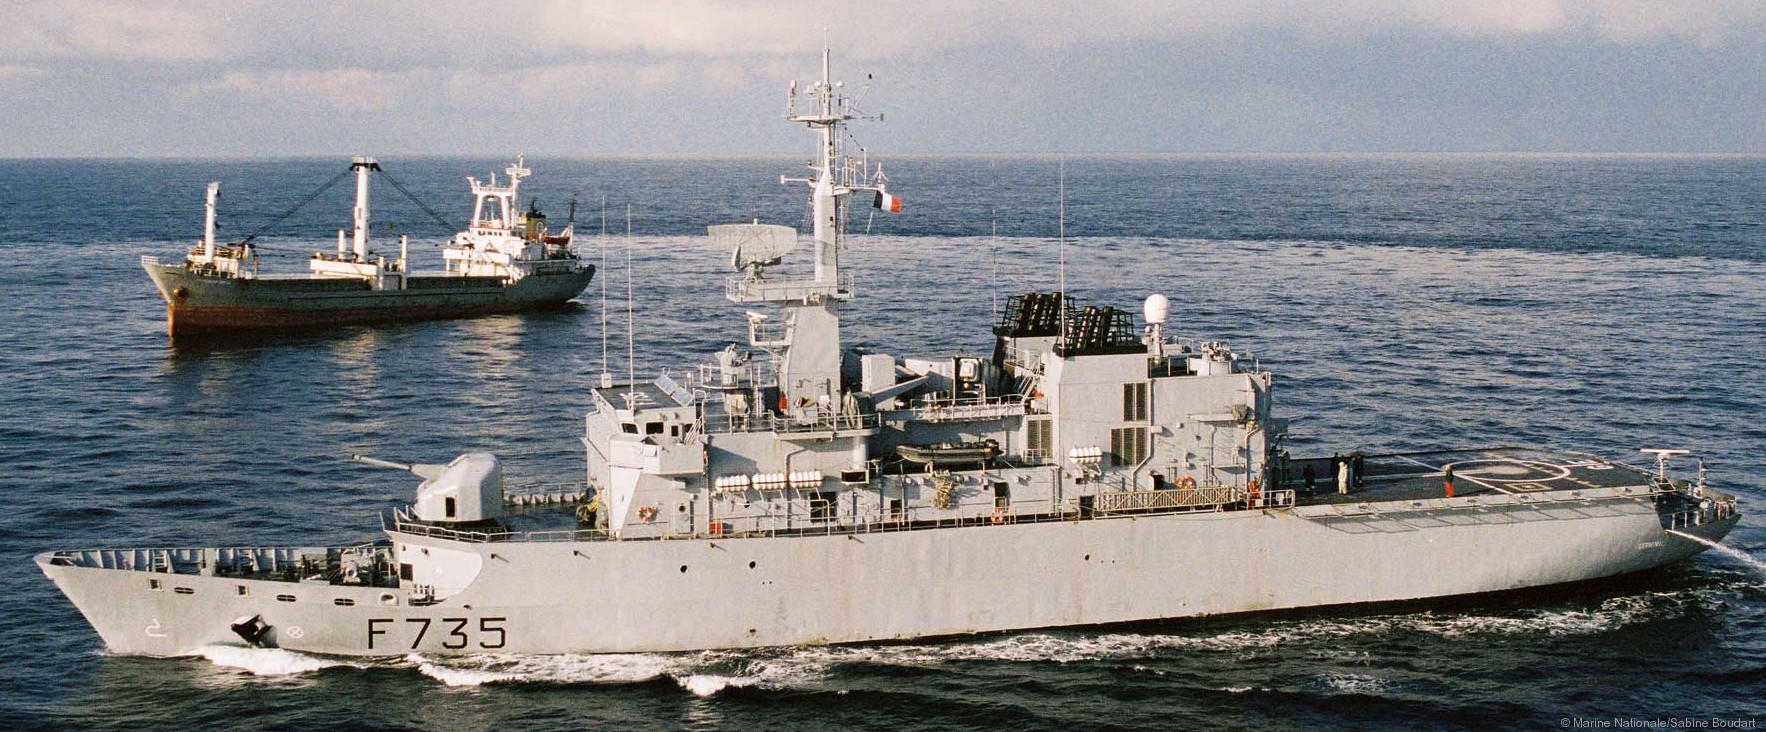 f-735 fs germinal floreal class frigate french navy marine nationale fregate de surveillance 05